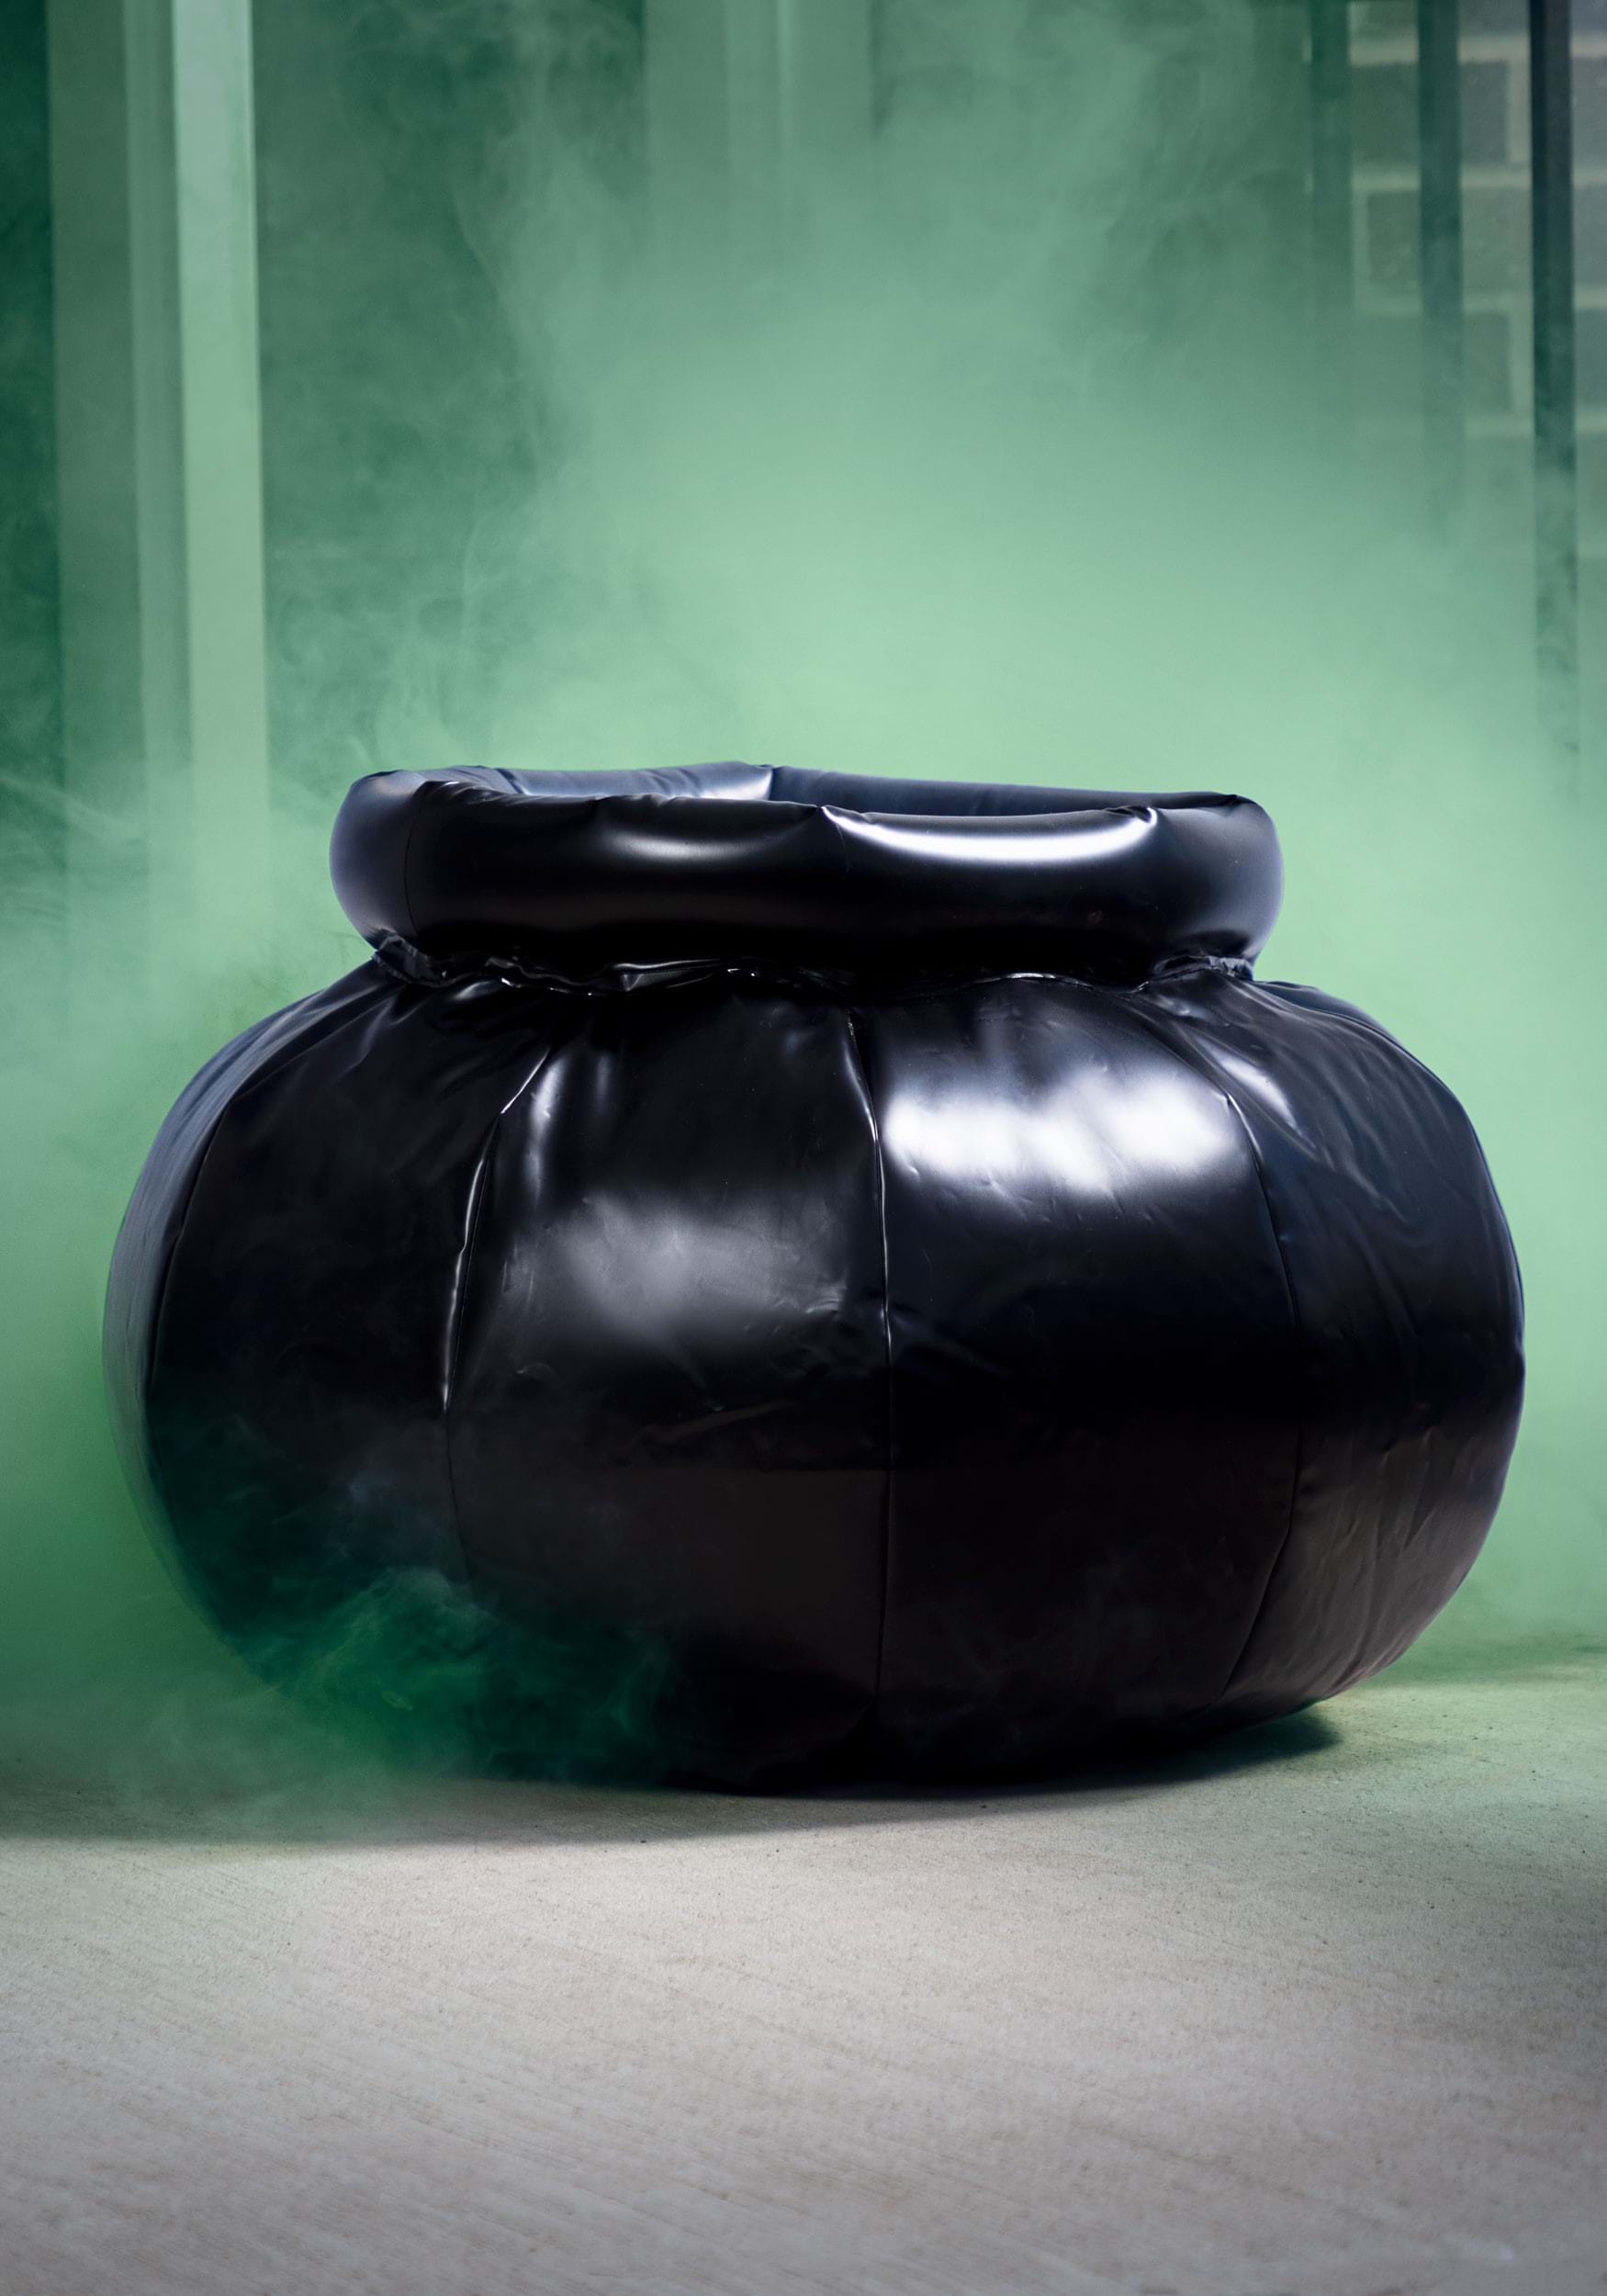 2FT Witch’s Cauldron Inflatable Decoration